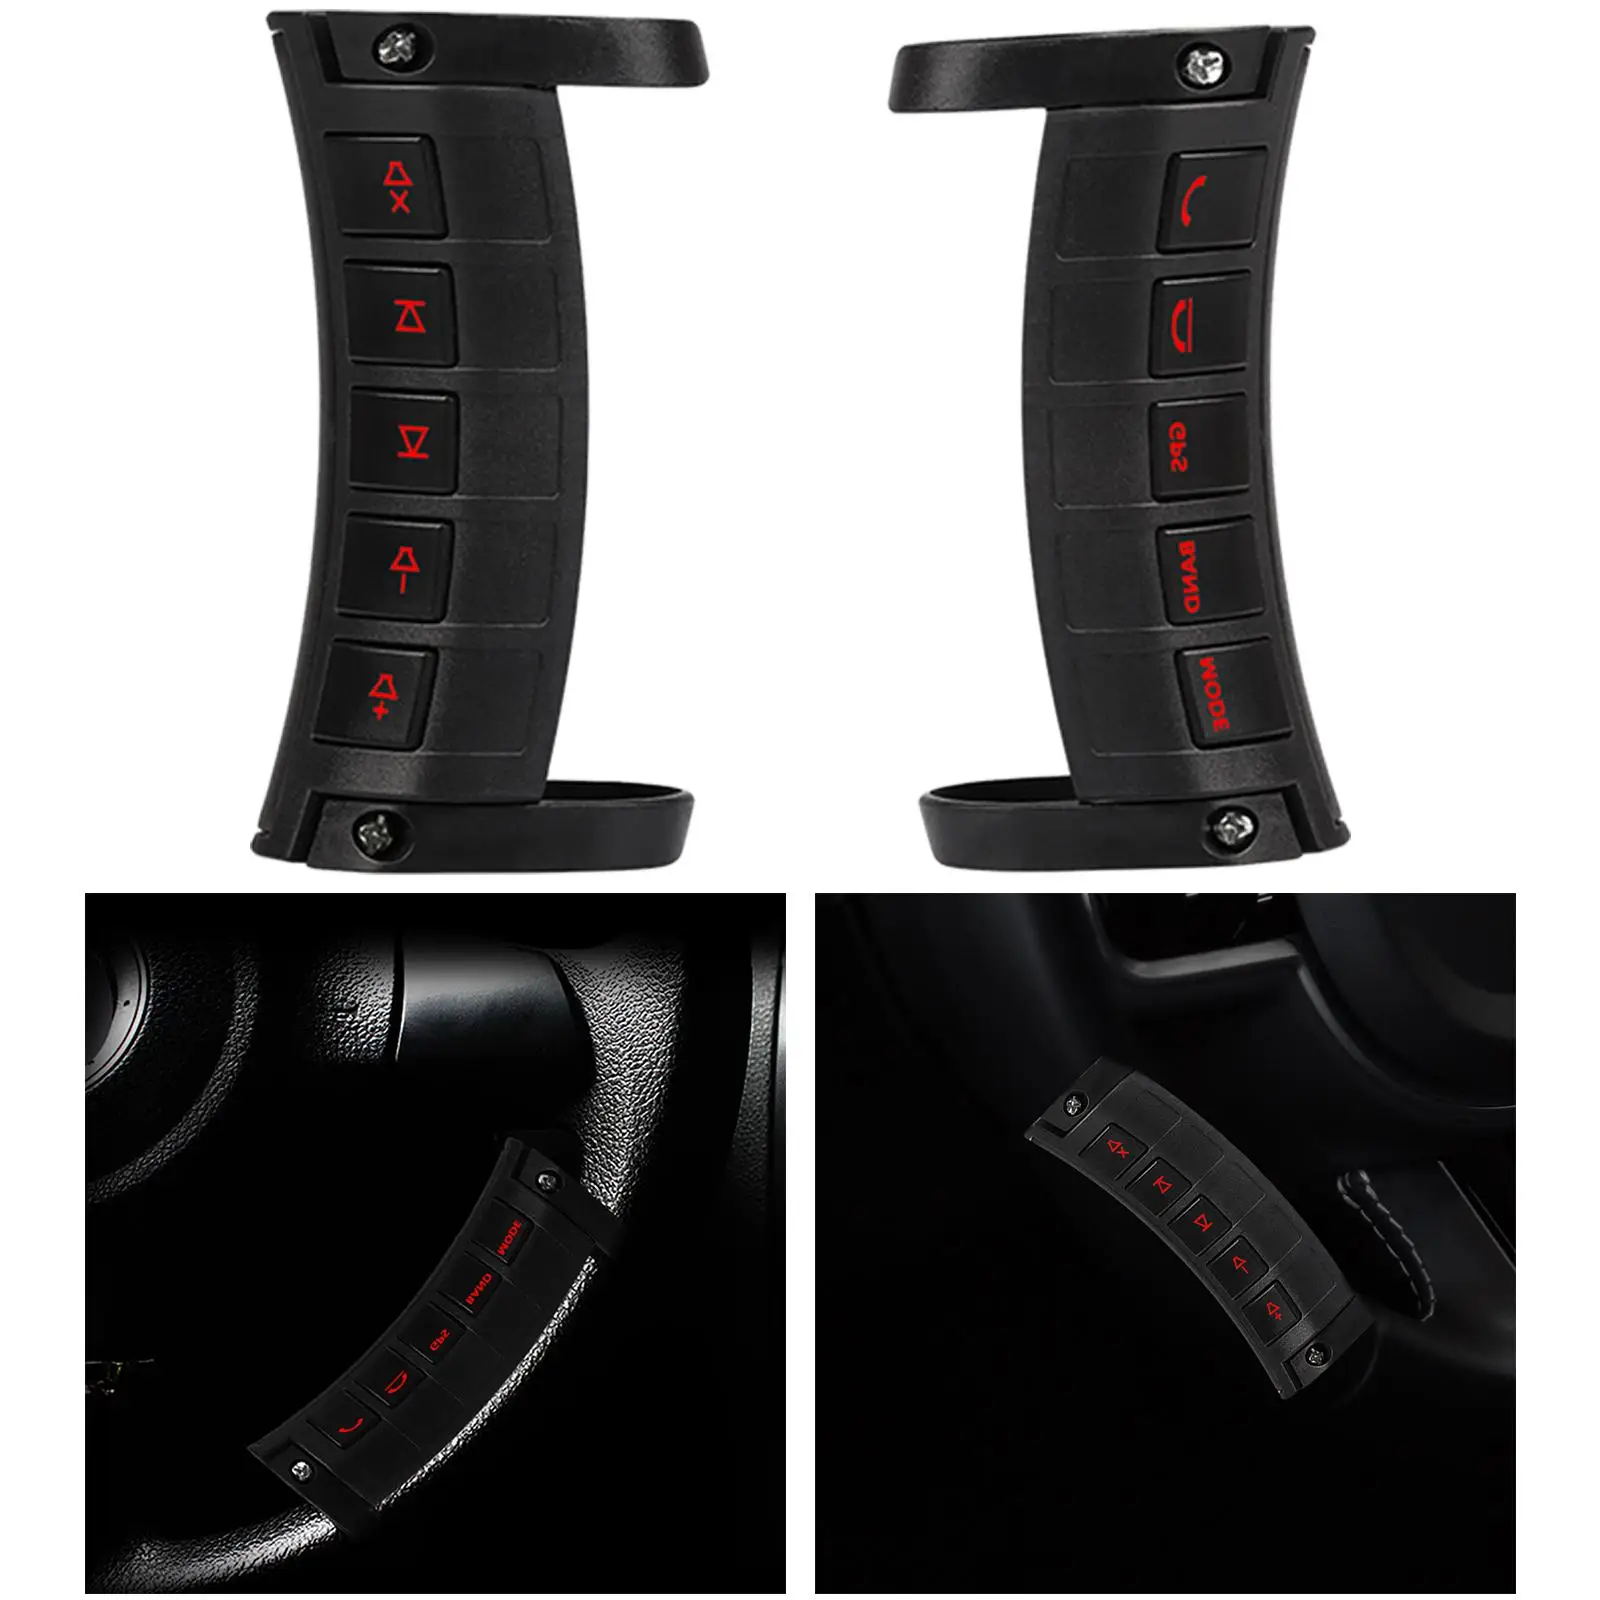 2x Car Steering Wheel Buttons Wireless 10 Keys Luminous for Navigation.